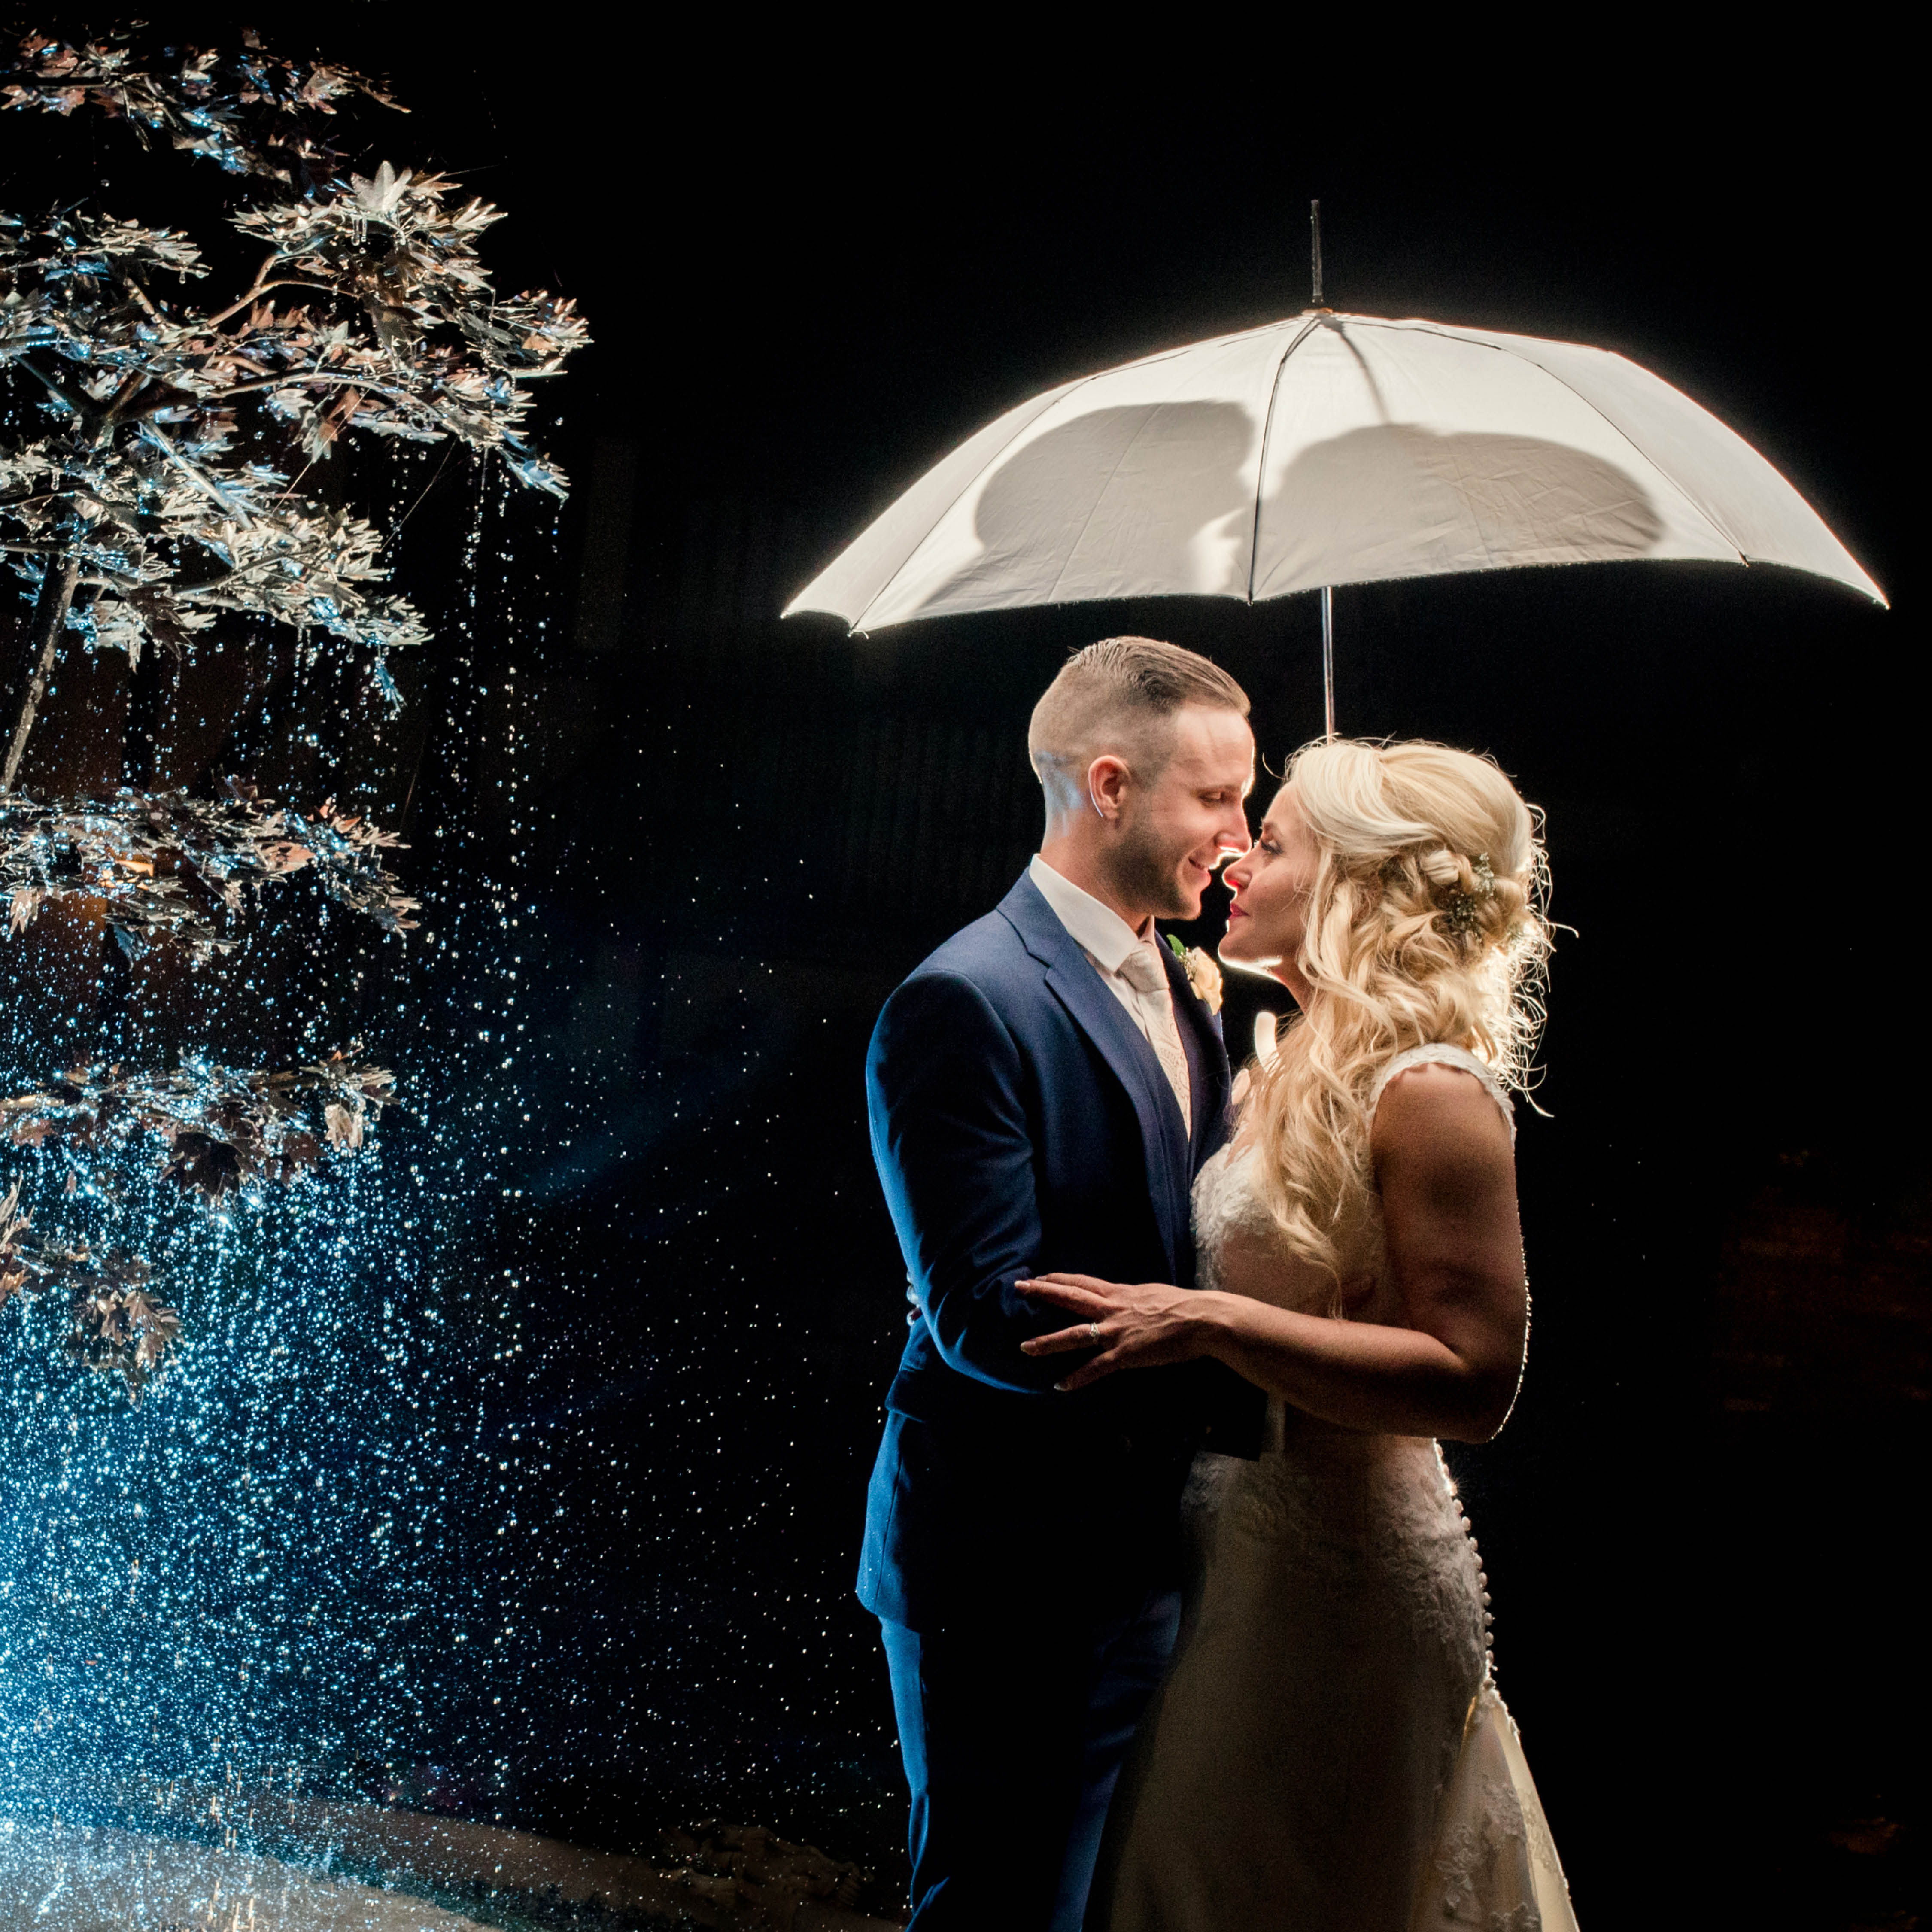 Plan for Rain on Your Wedding Day, wedding umbrellas